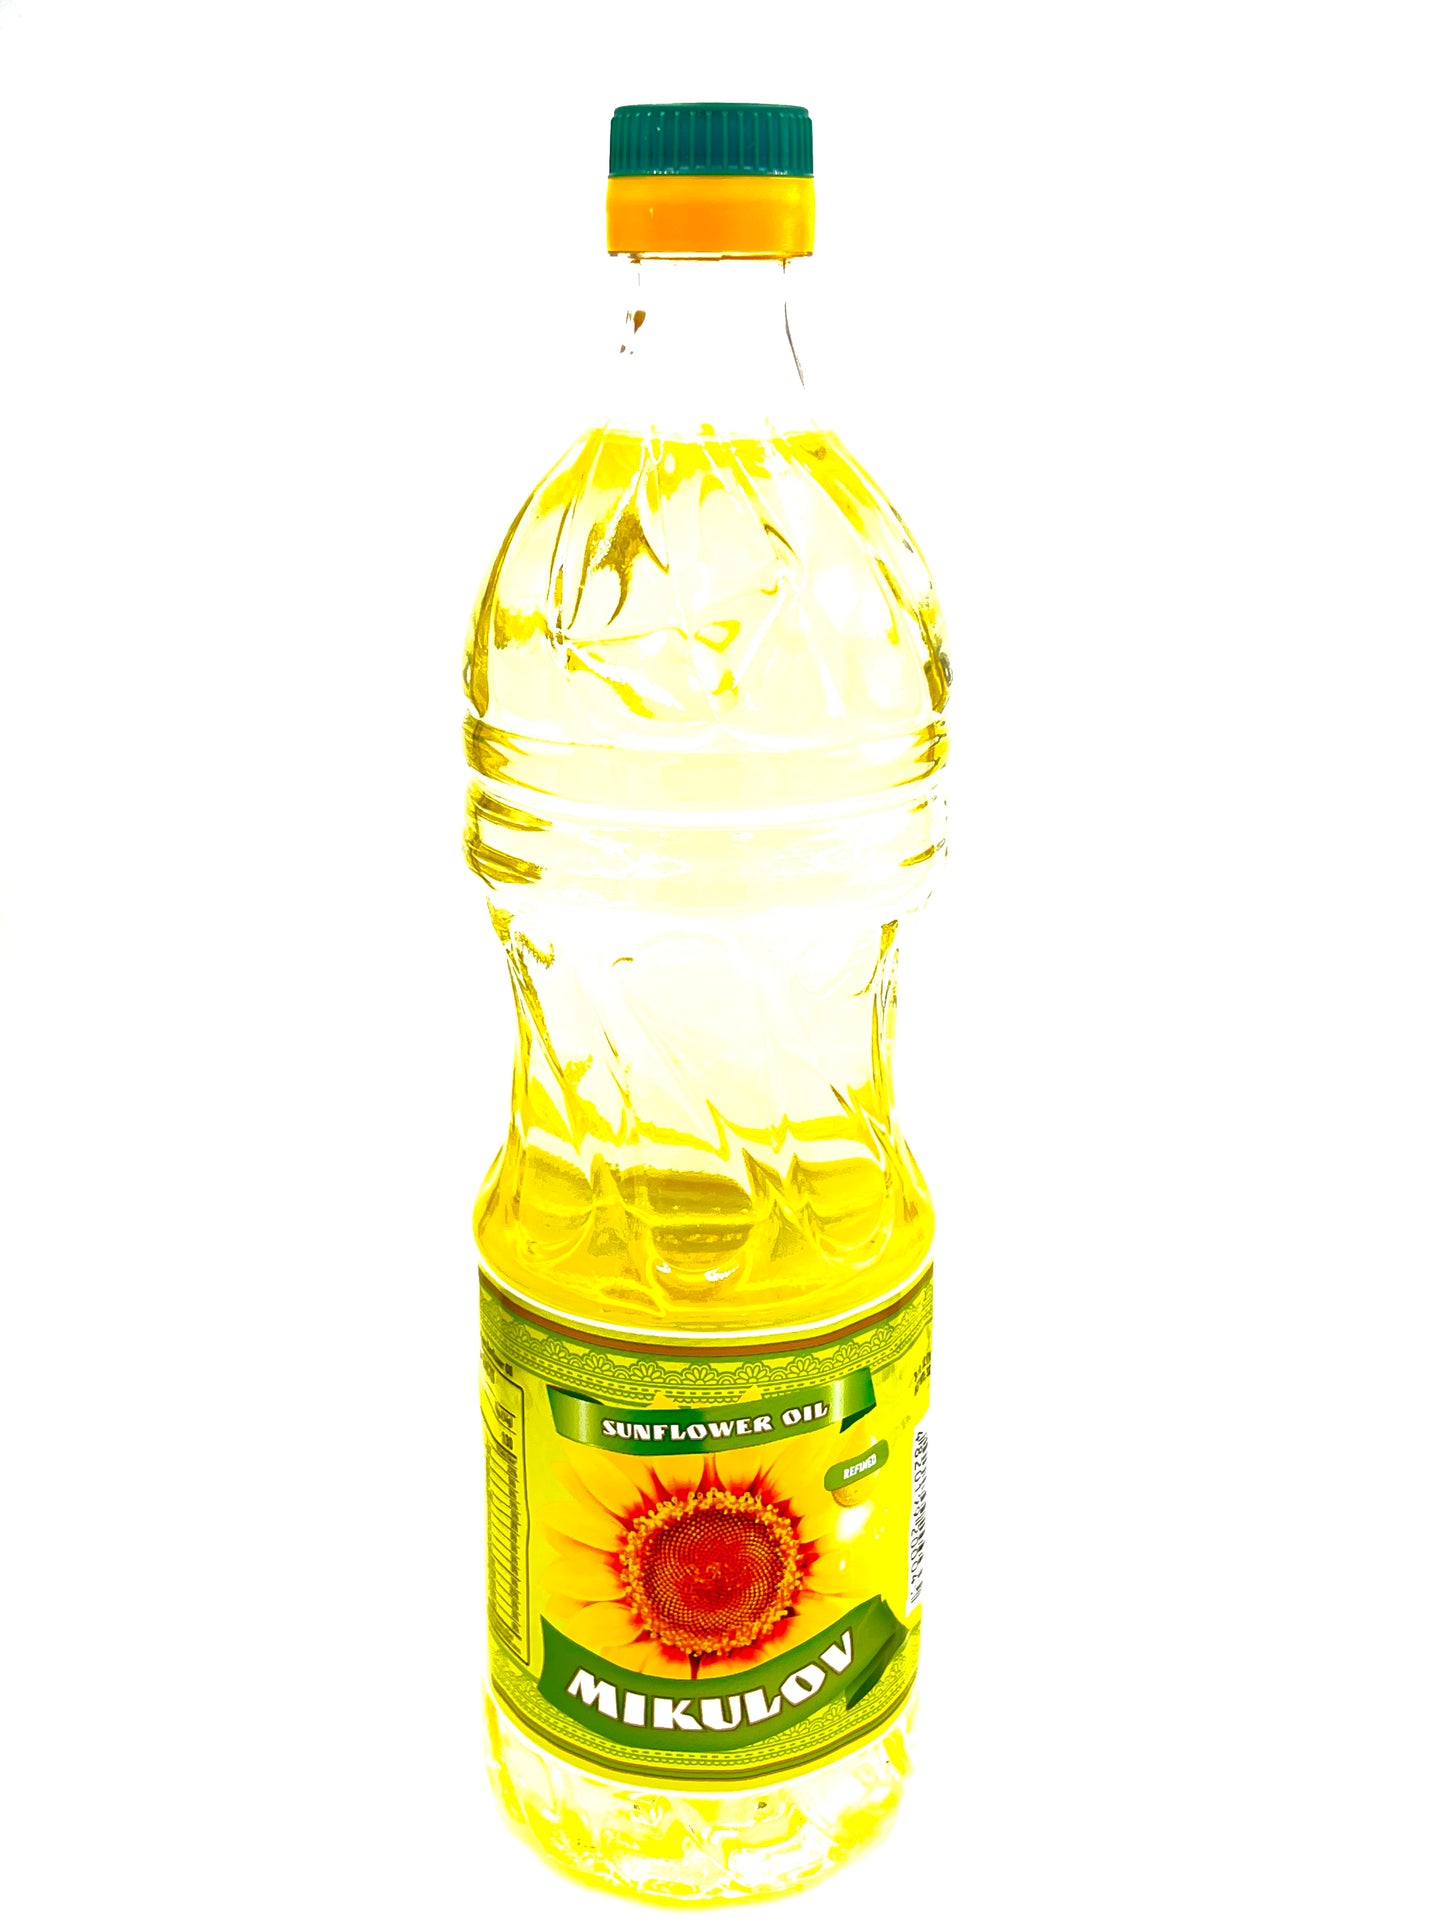 Mikulov Refined Sunflower Oil, 1L